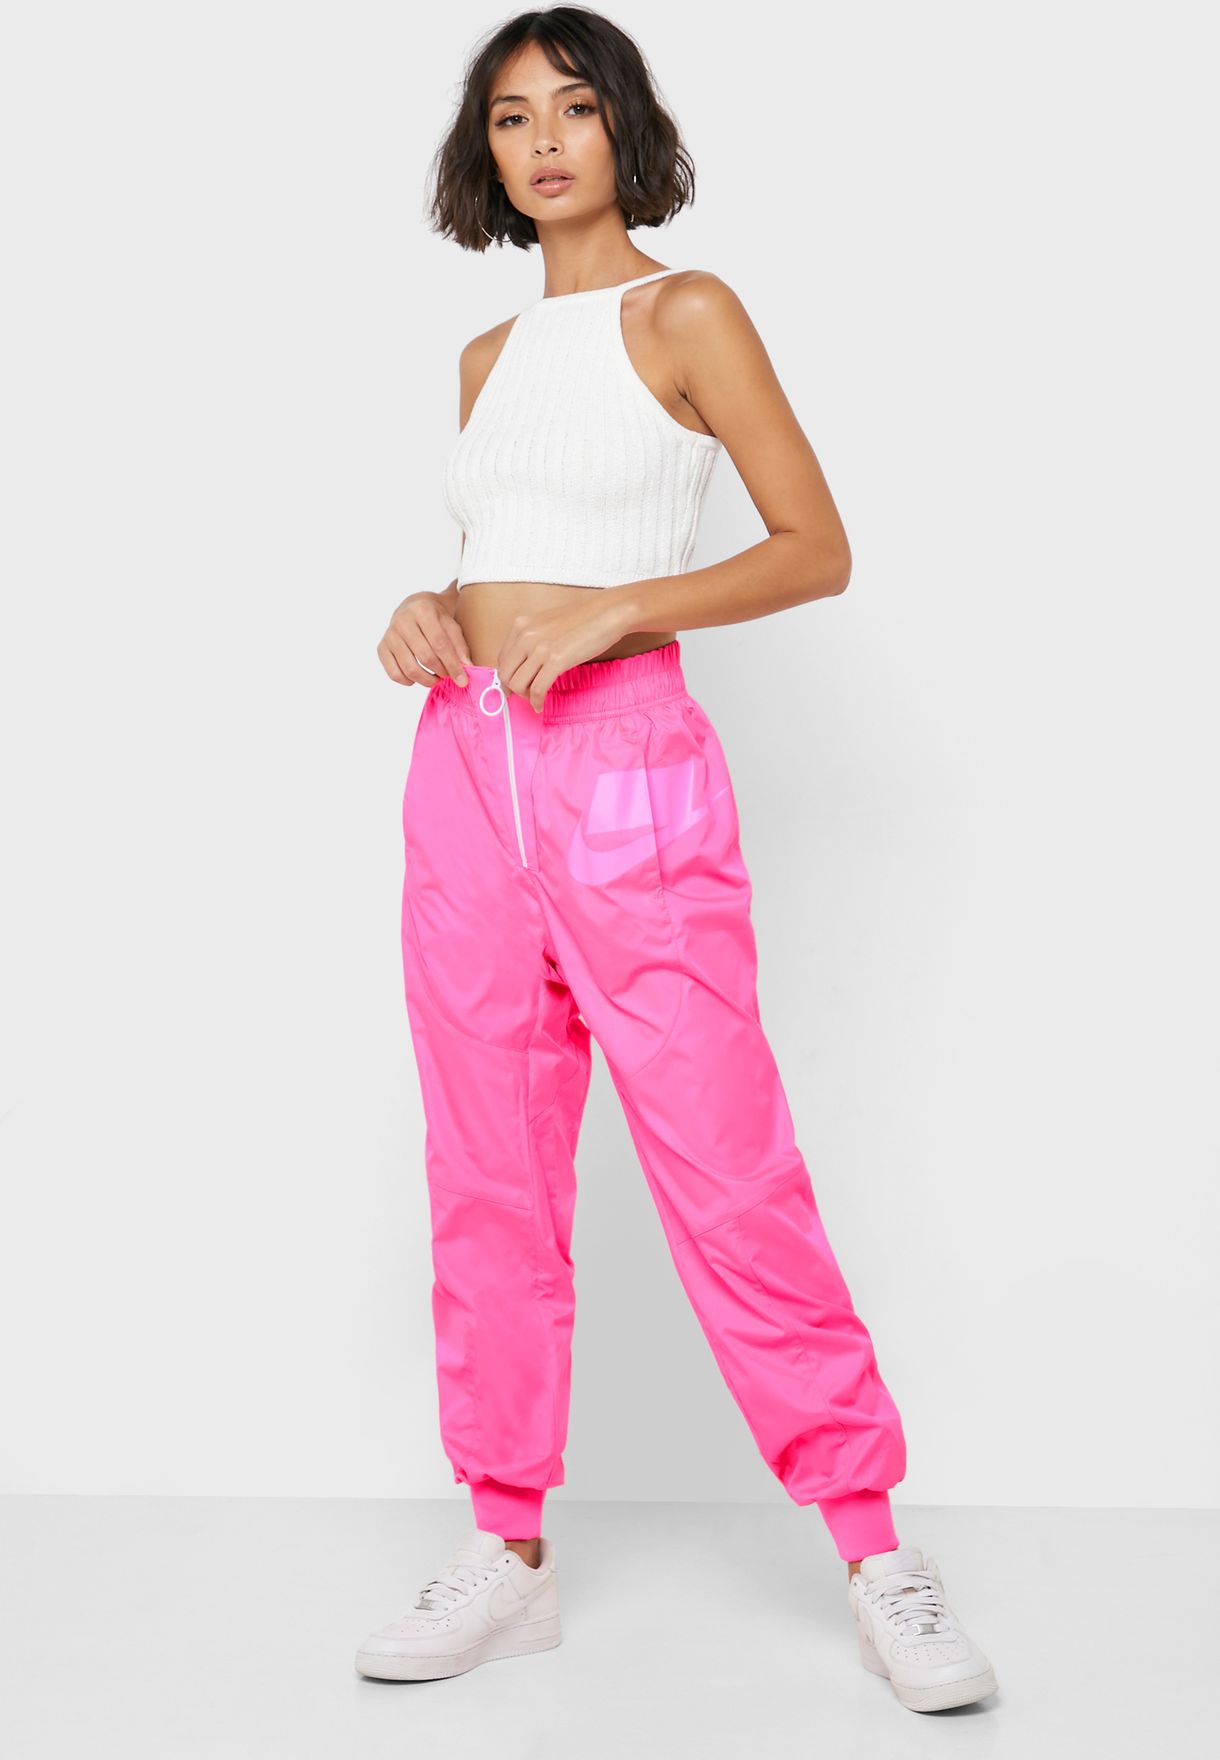 nike high waisted pink cargo pants